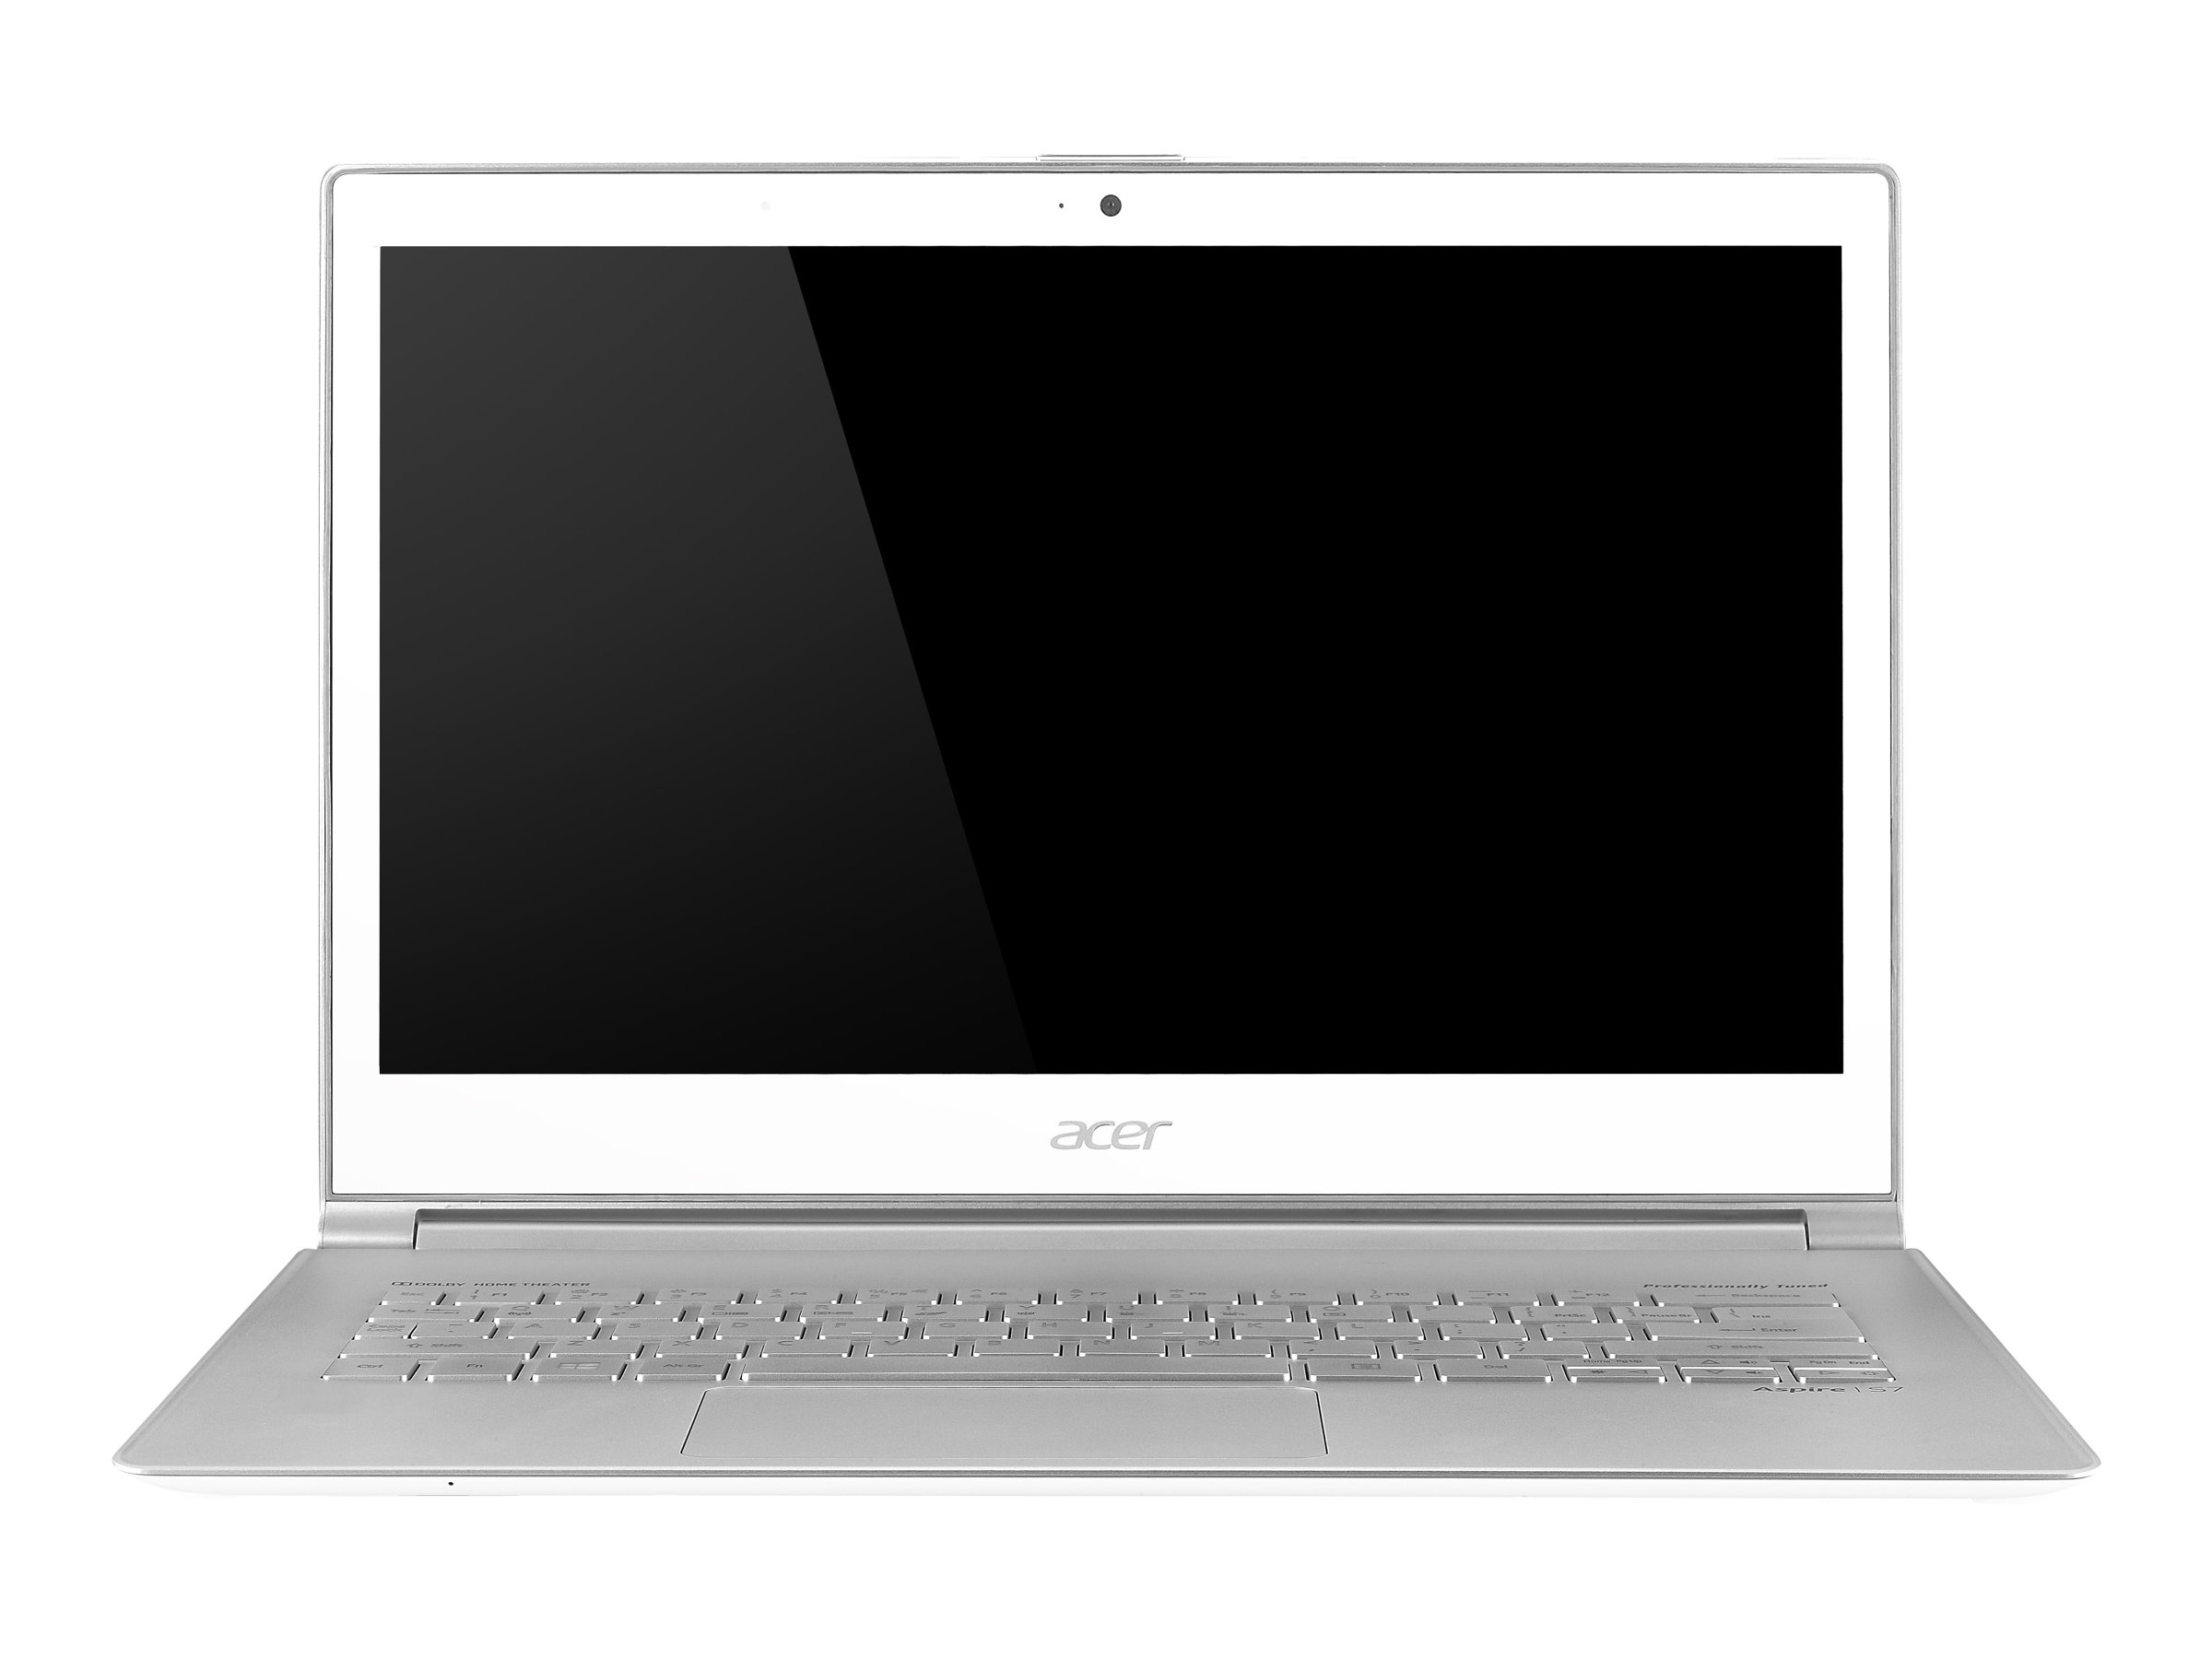 Acer Aspire S7 (391)